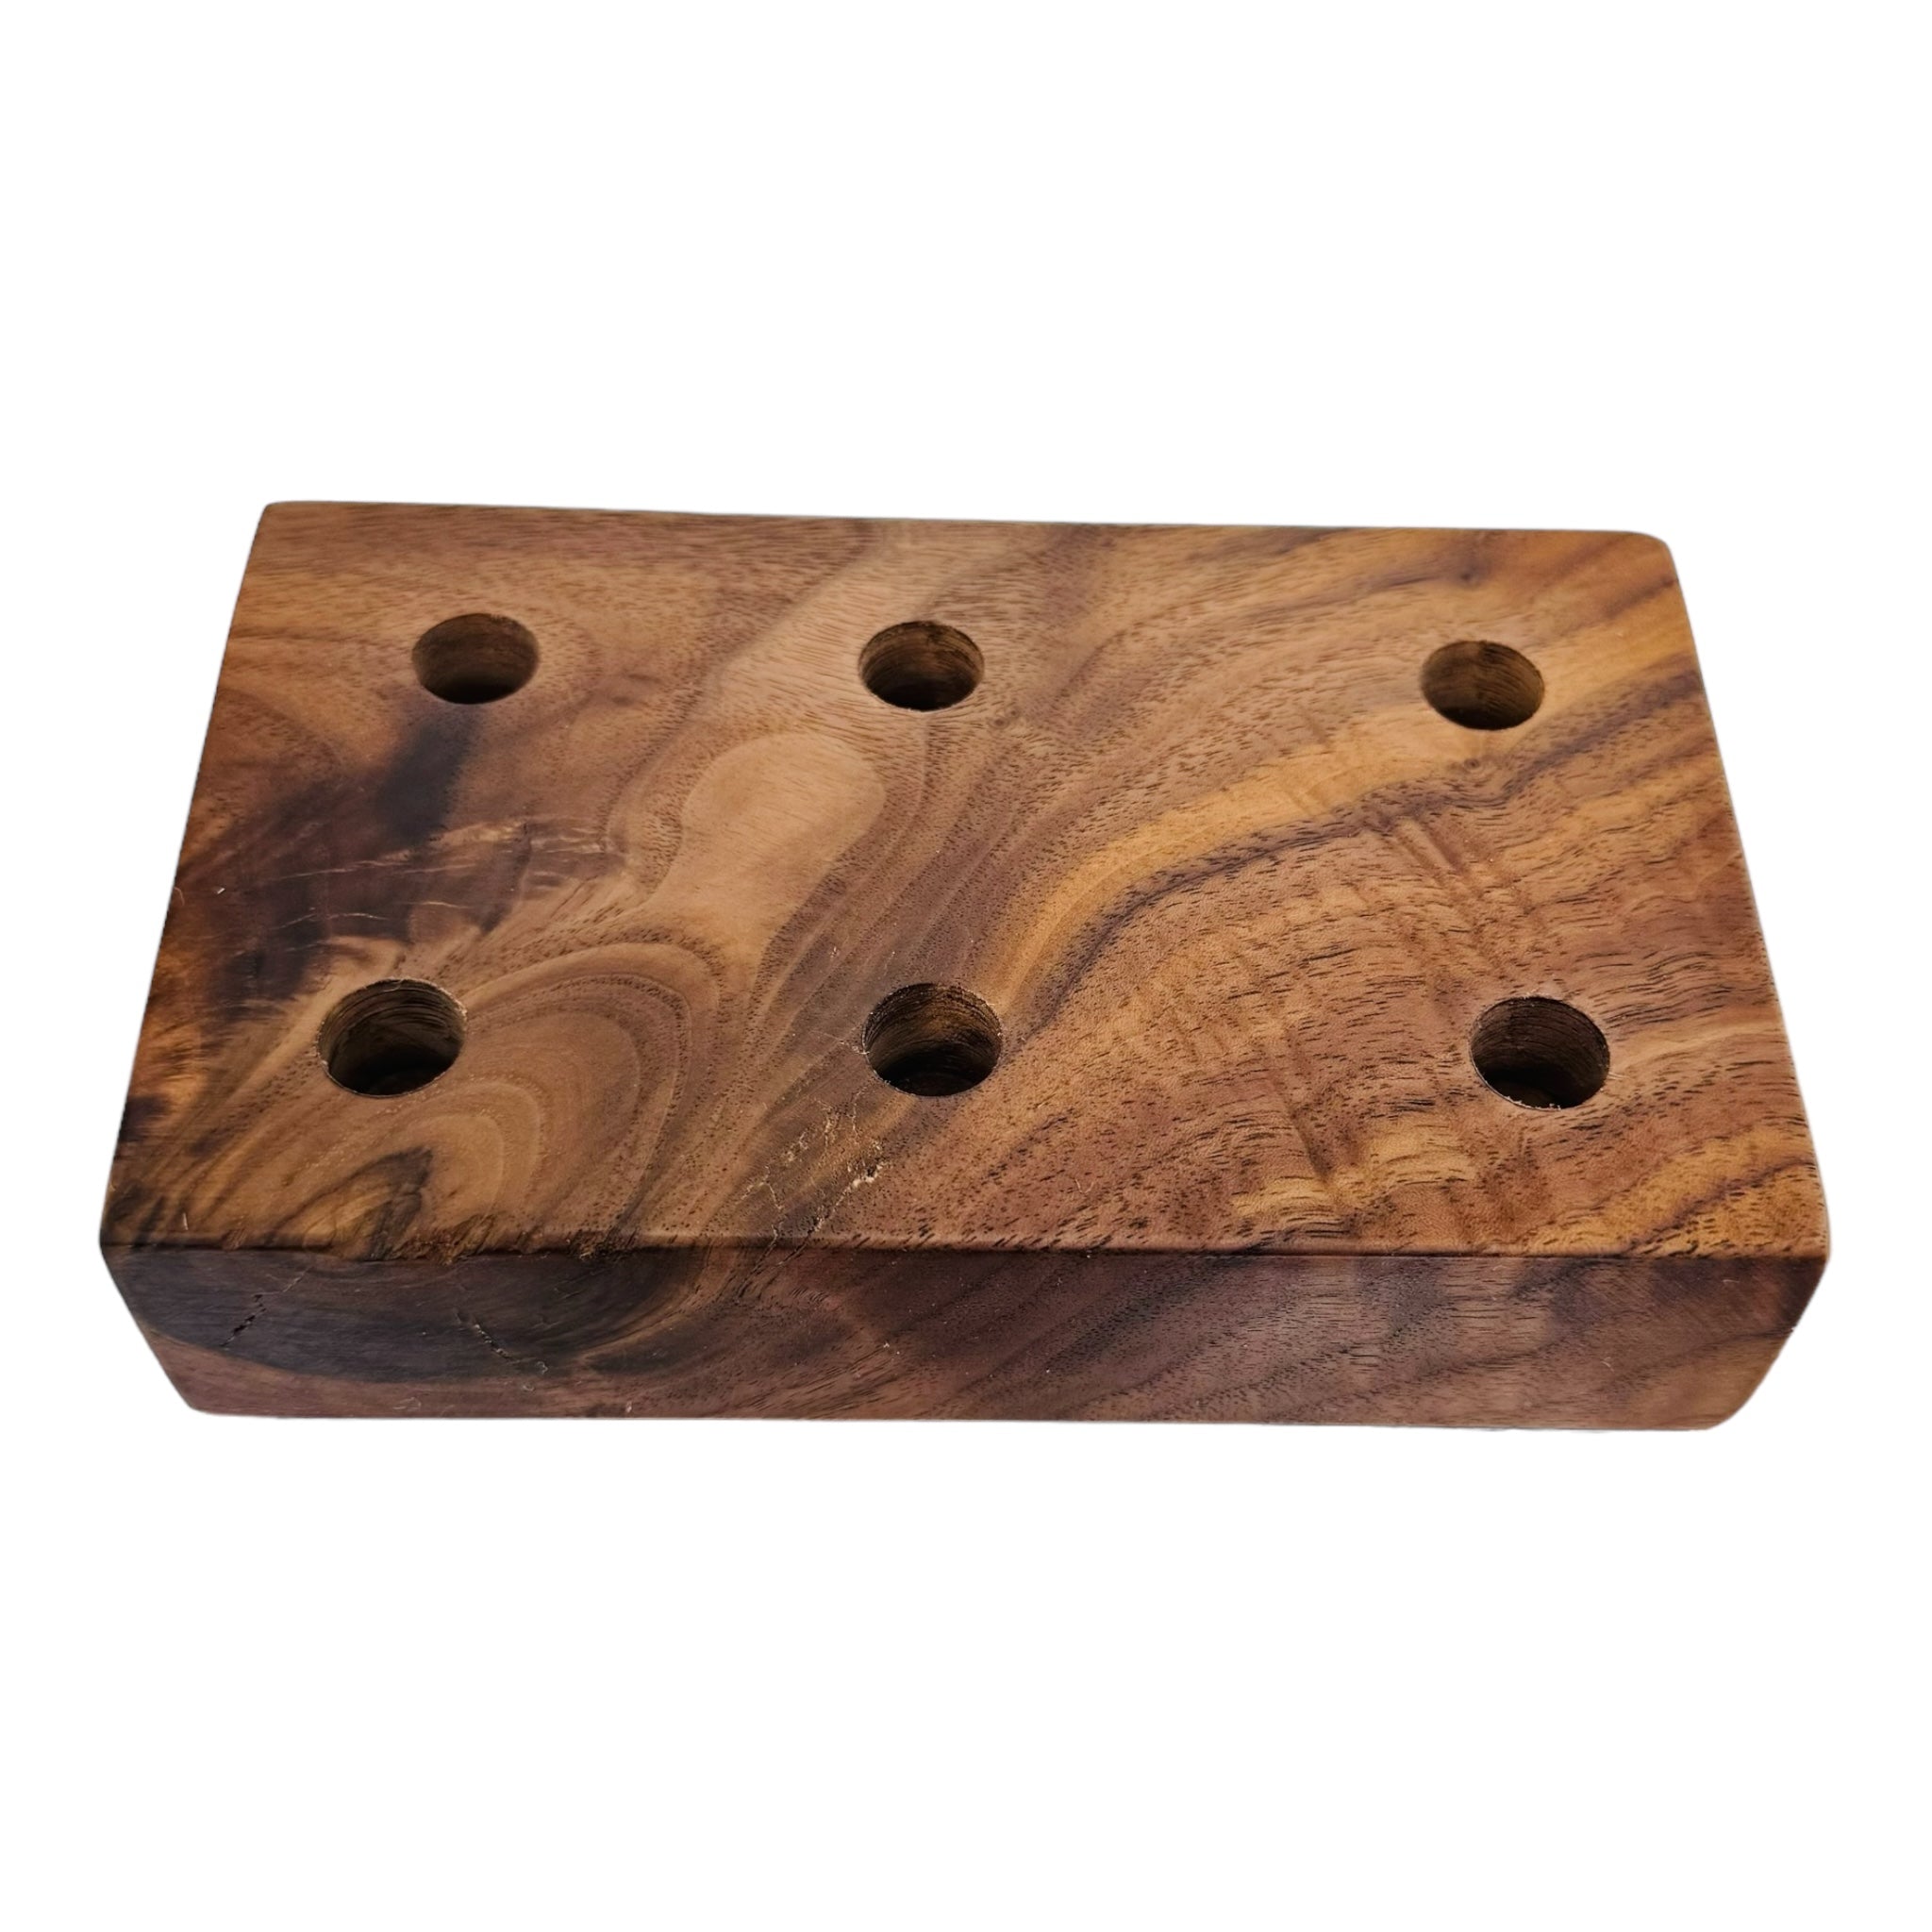 6 Hole Wood Display Stand Holder For 14mm Bong Bowl Pieces Or Quartz Bangers - Black Walnut Burl